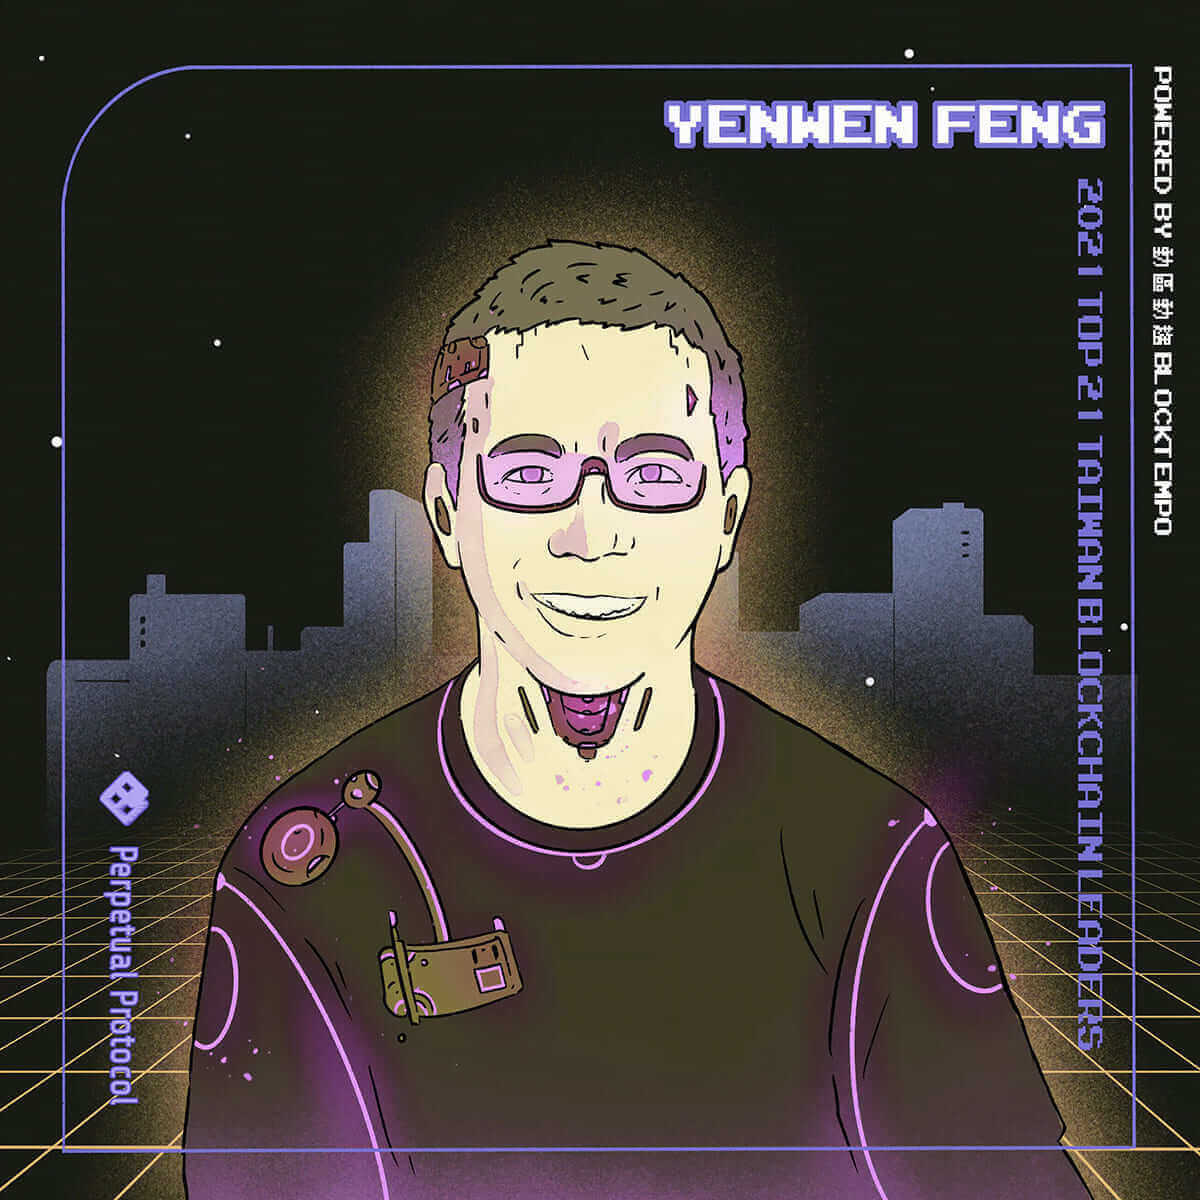 Yenwen Feng